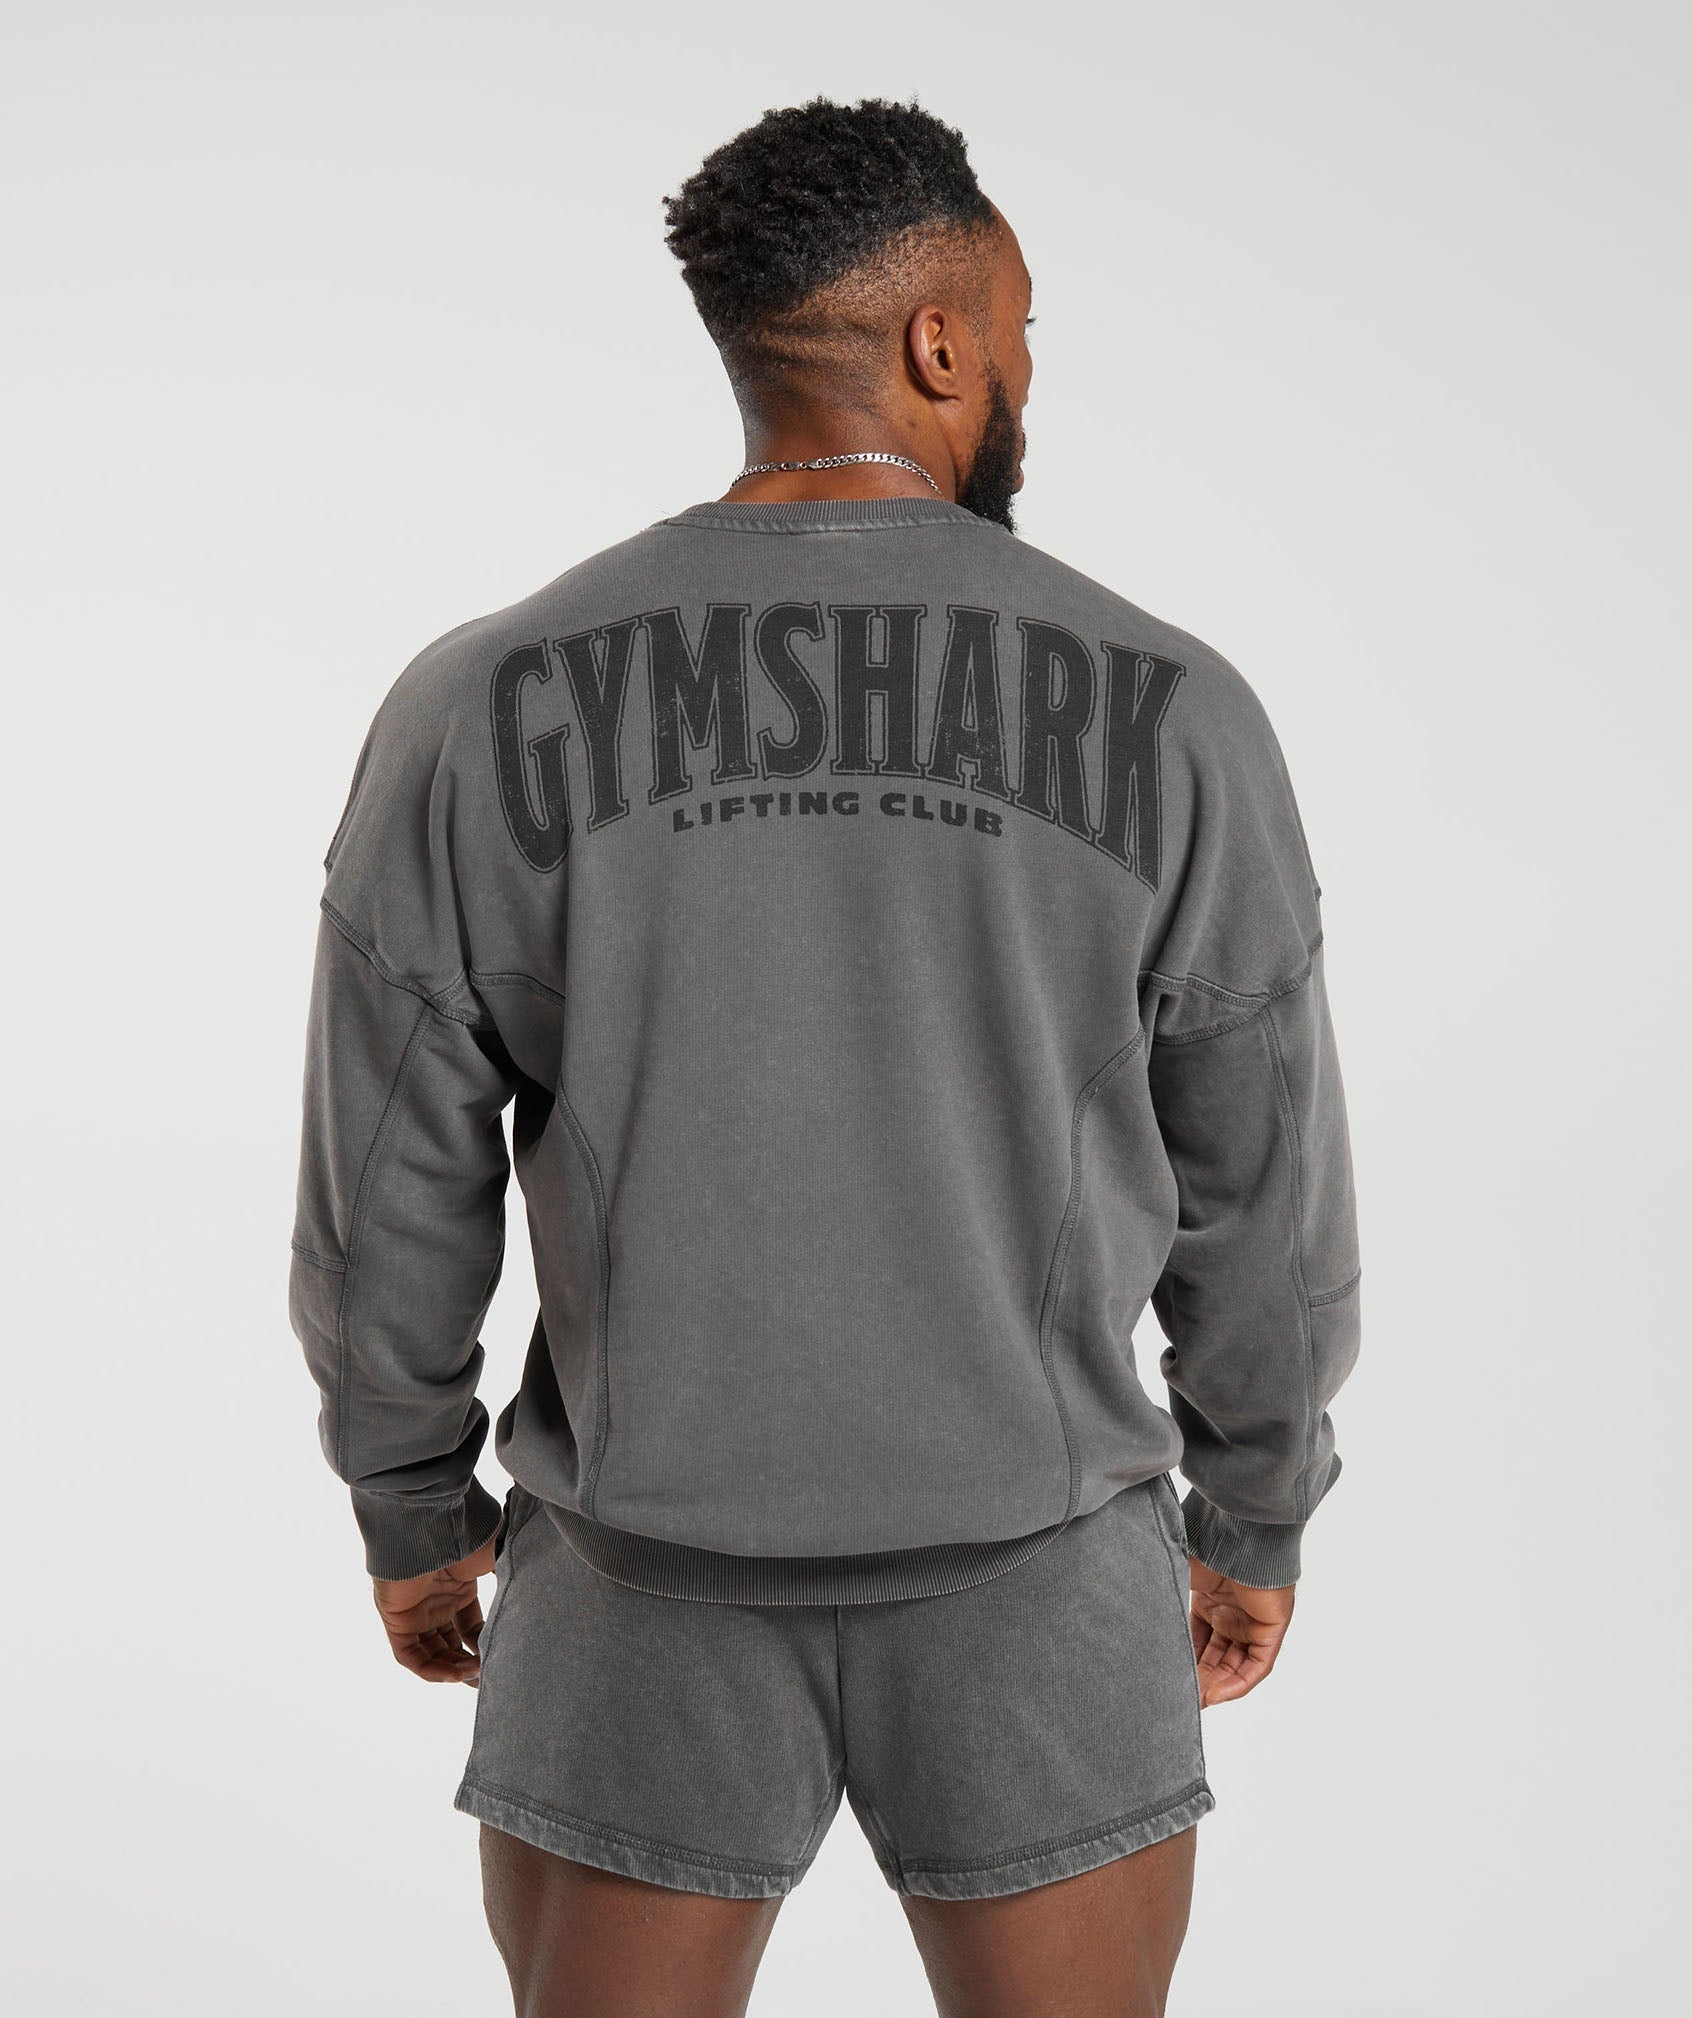 Gymshark cotton gym chaleco Bodybuilding clothing men Fitness